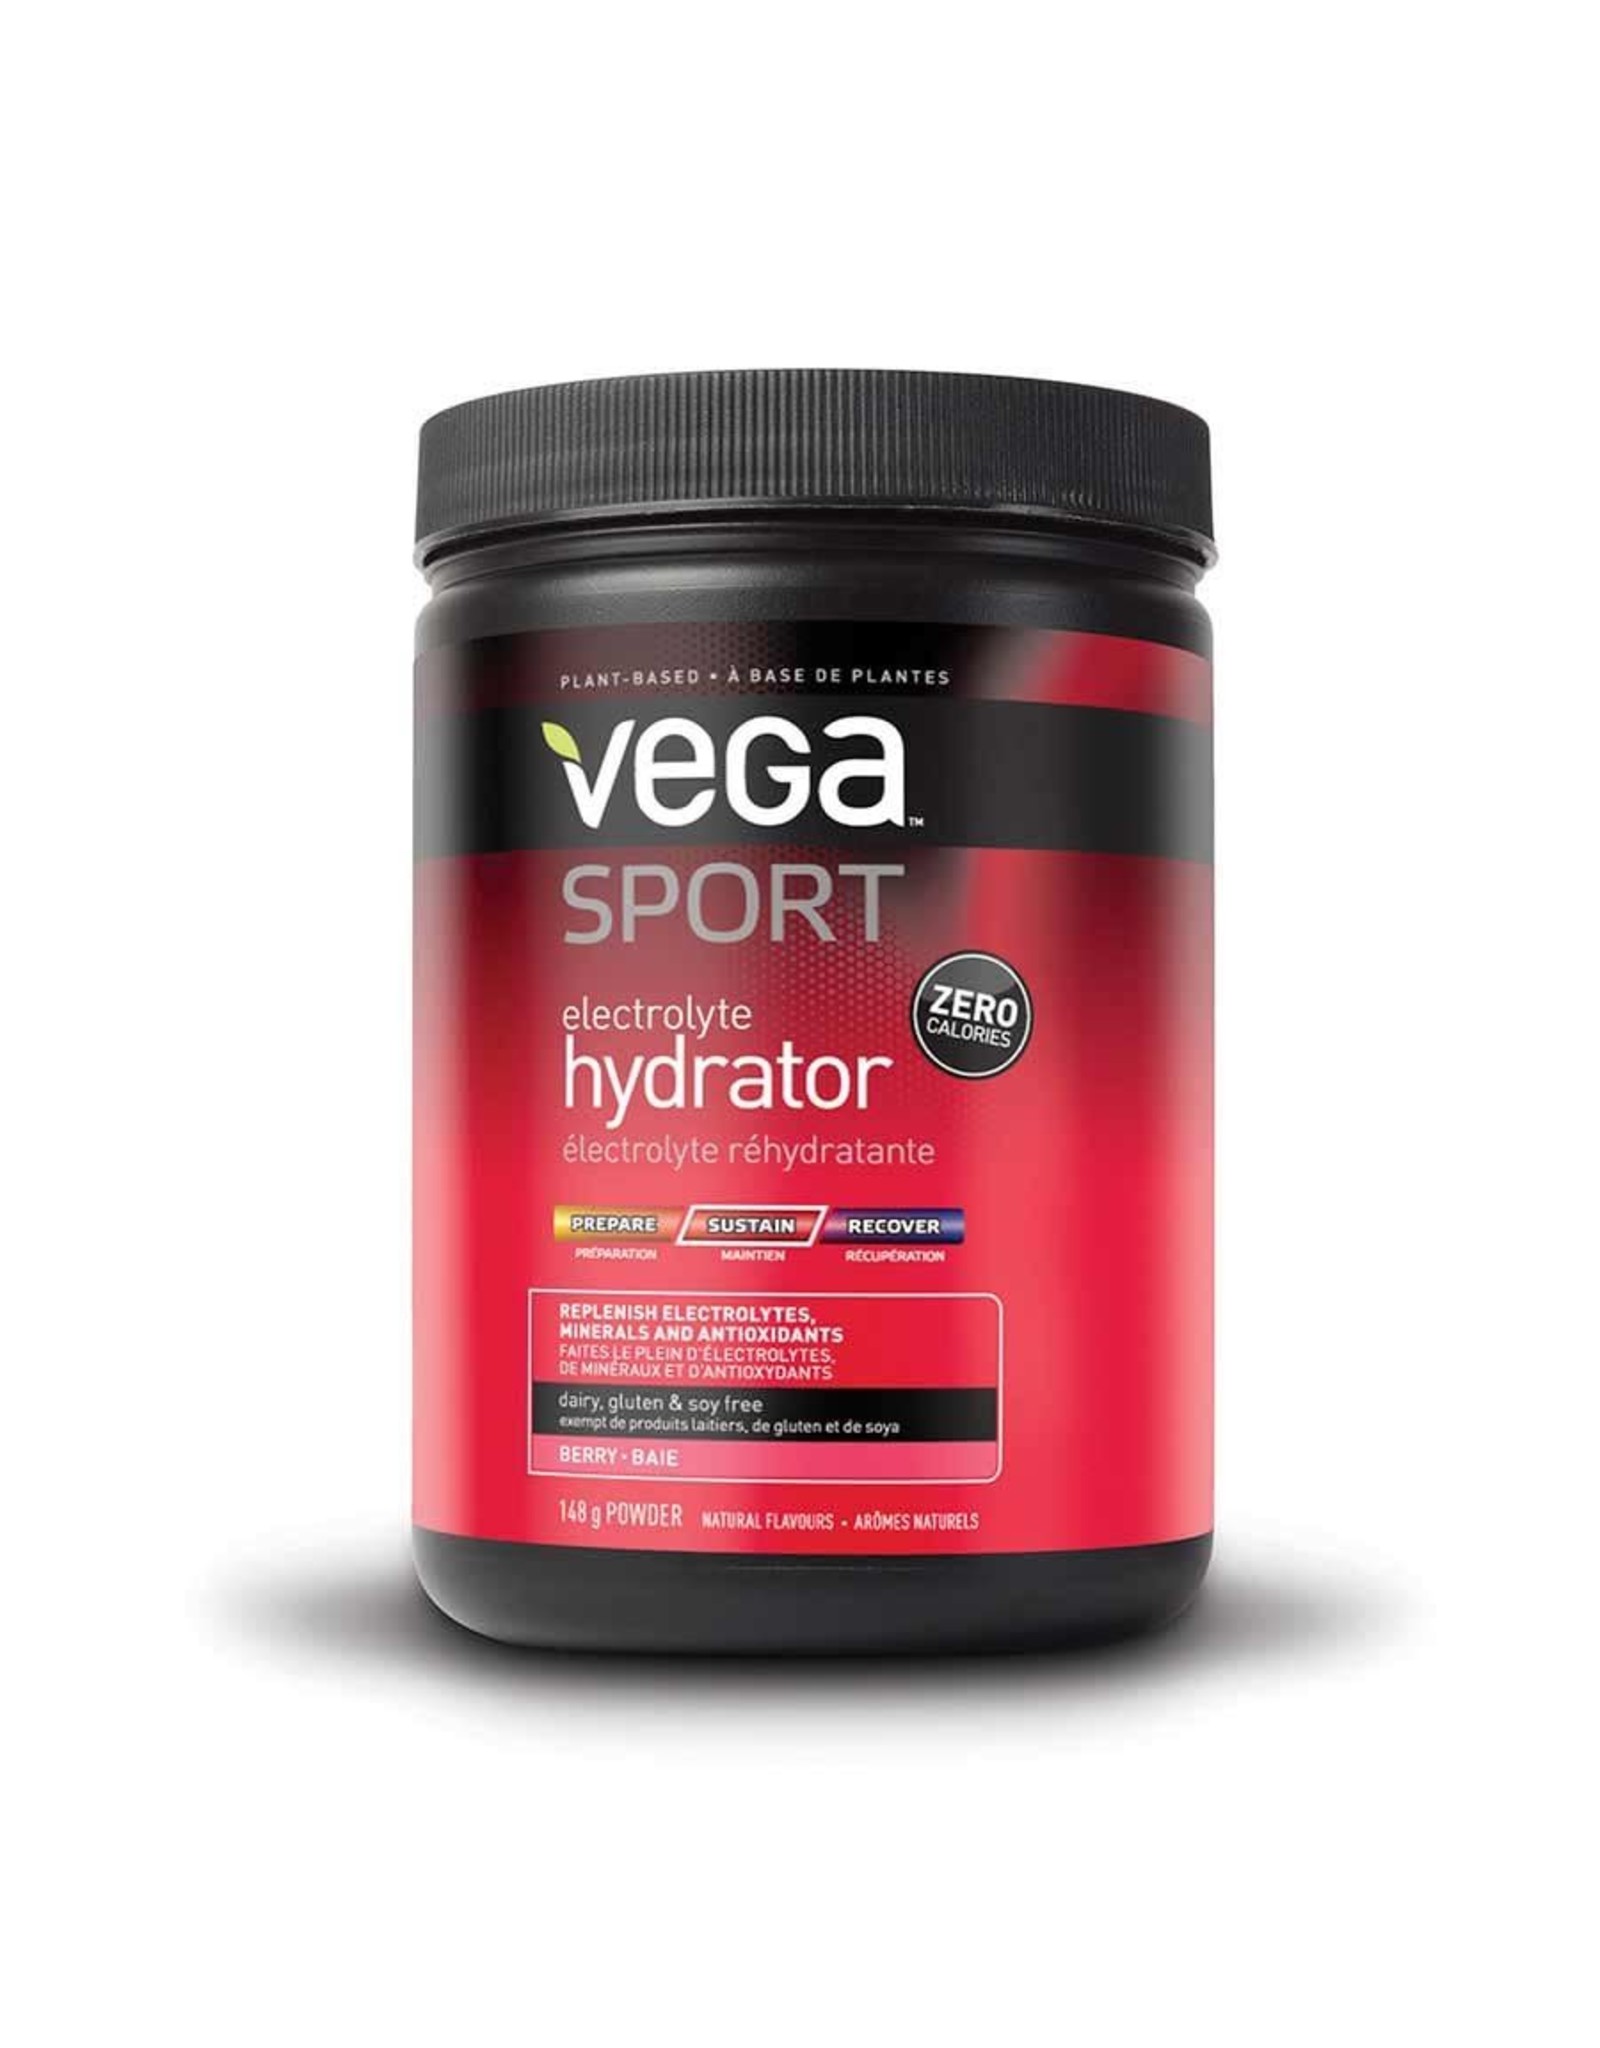 Mixed Vega electrolytes hydratation berries